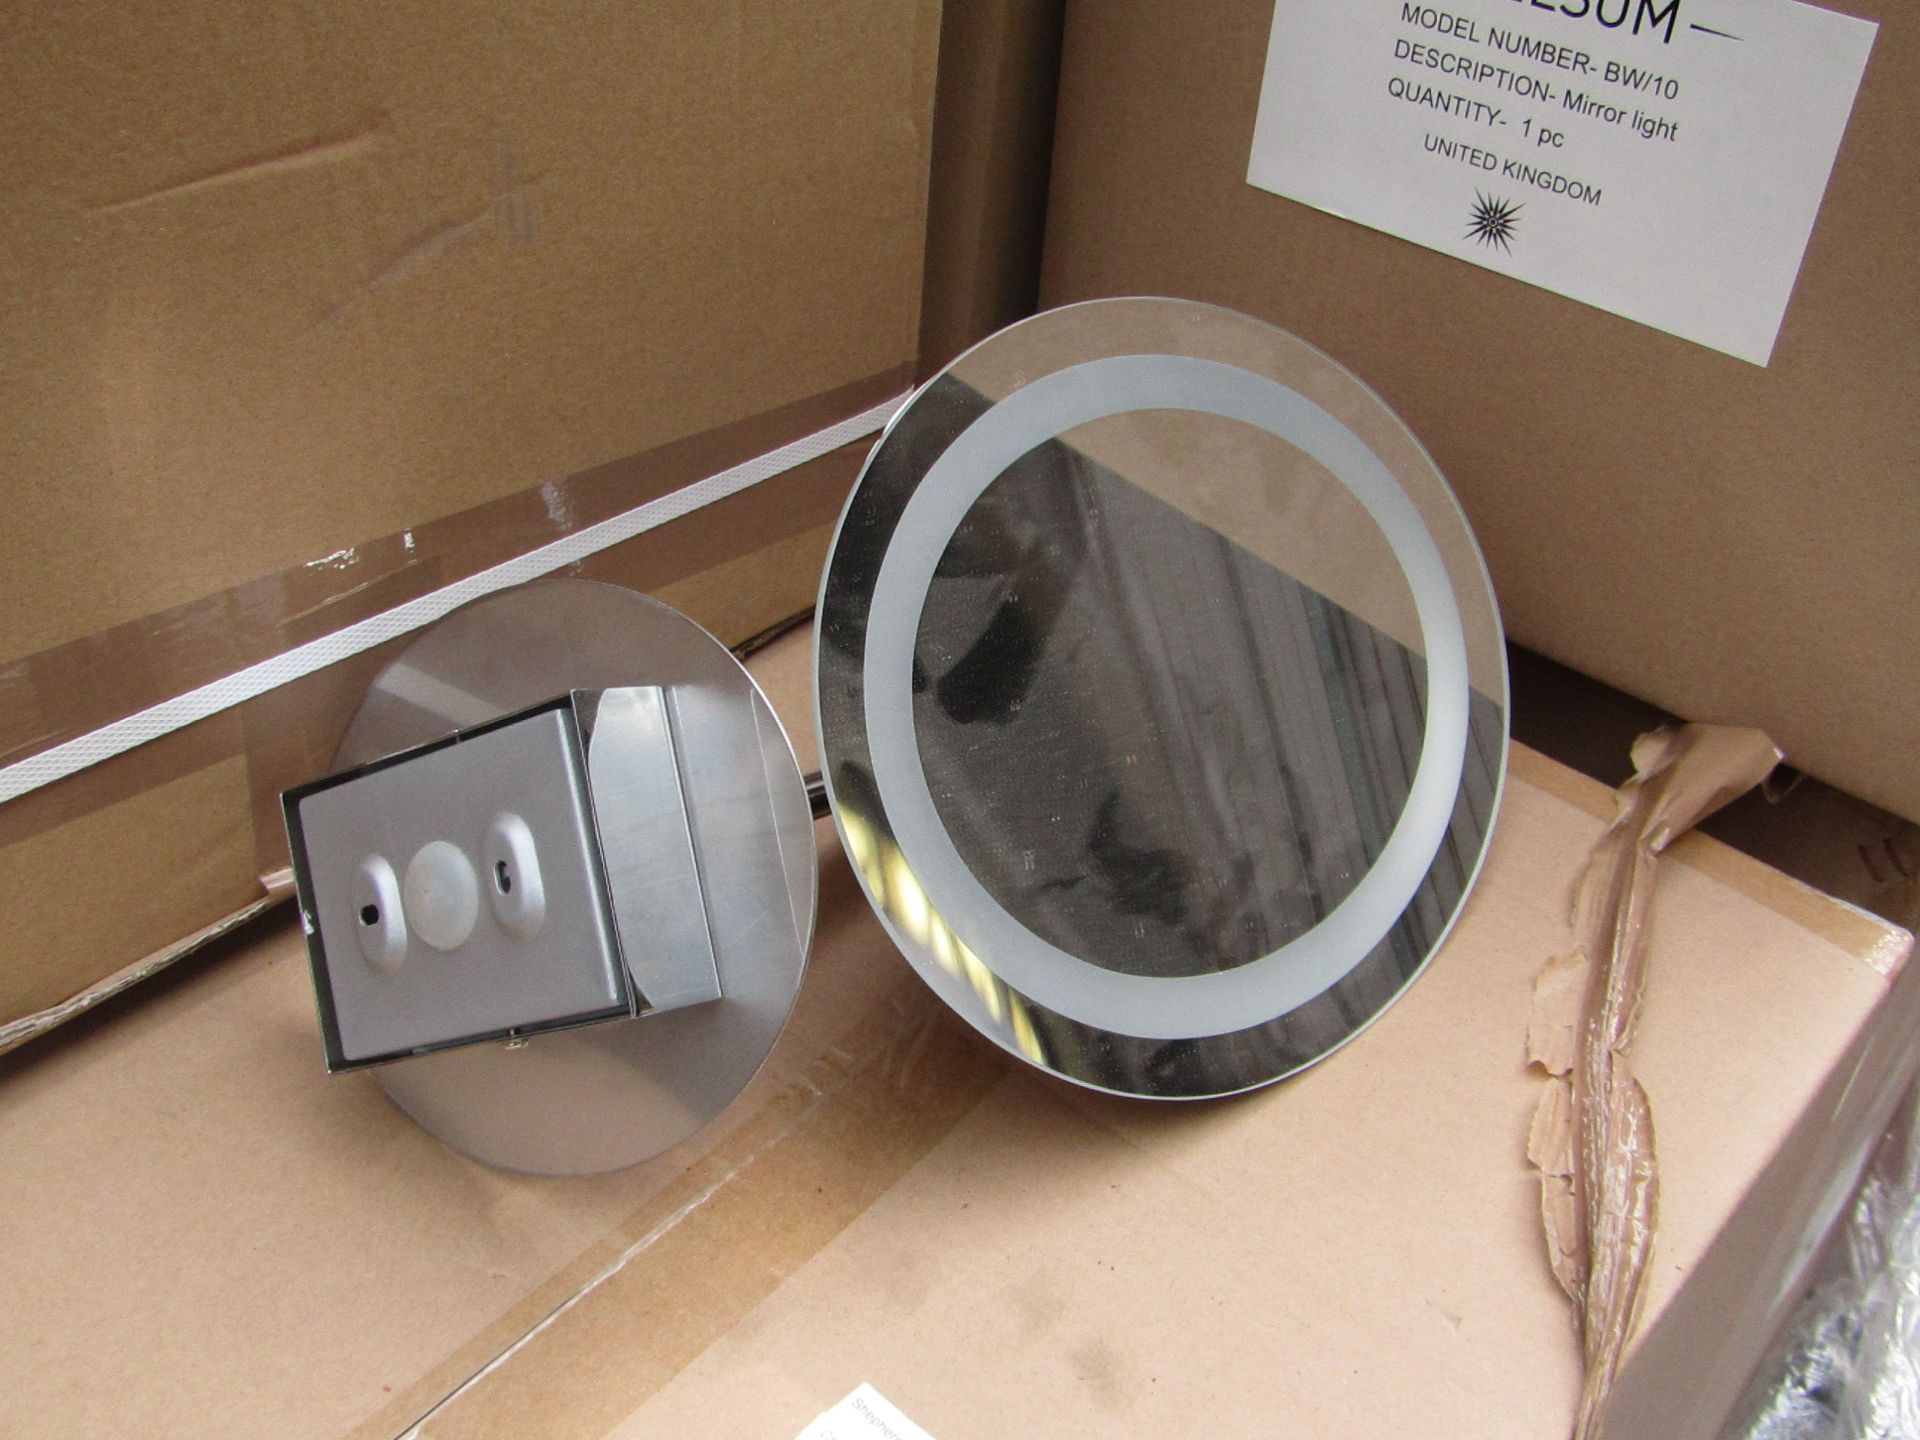 Cheslom BW/10 Chrome Illuminate Magnified & Swivel Bathroom Mirror, RRP £270 boxed